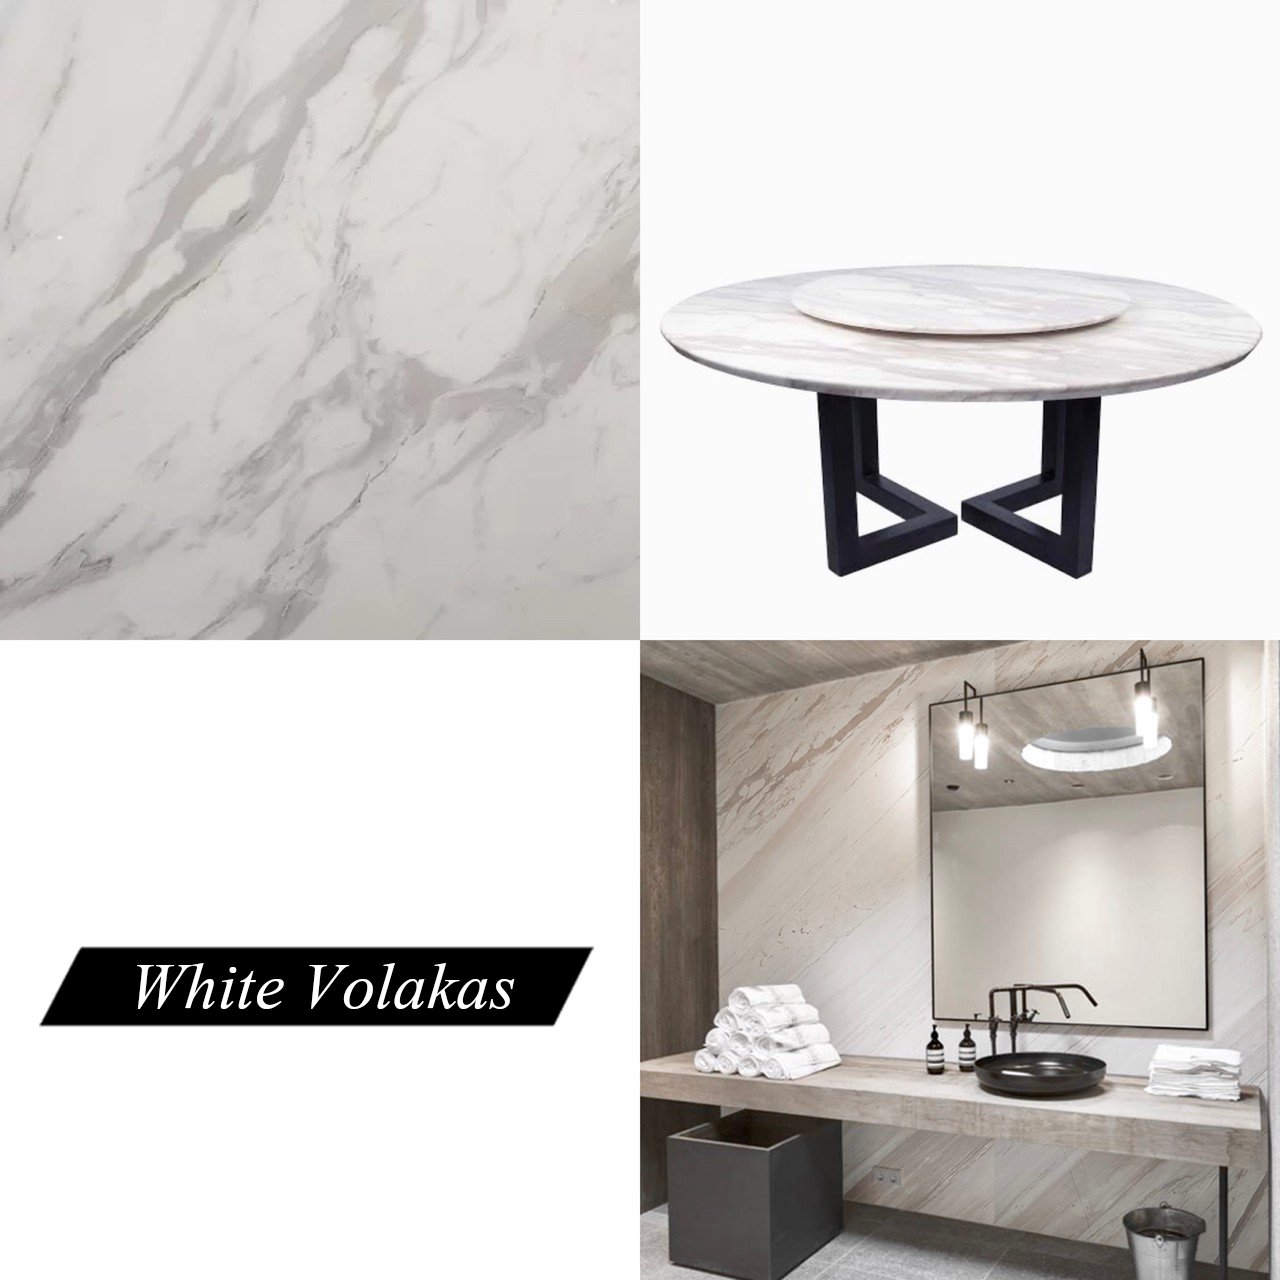  White Volakus marble